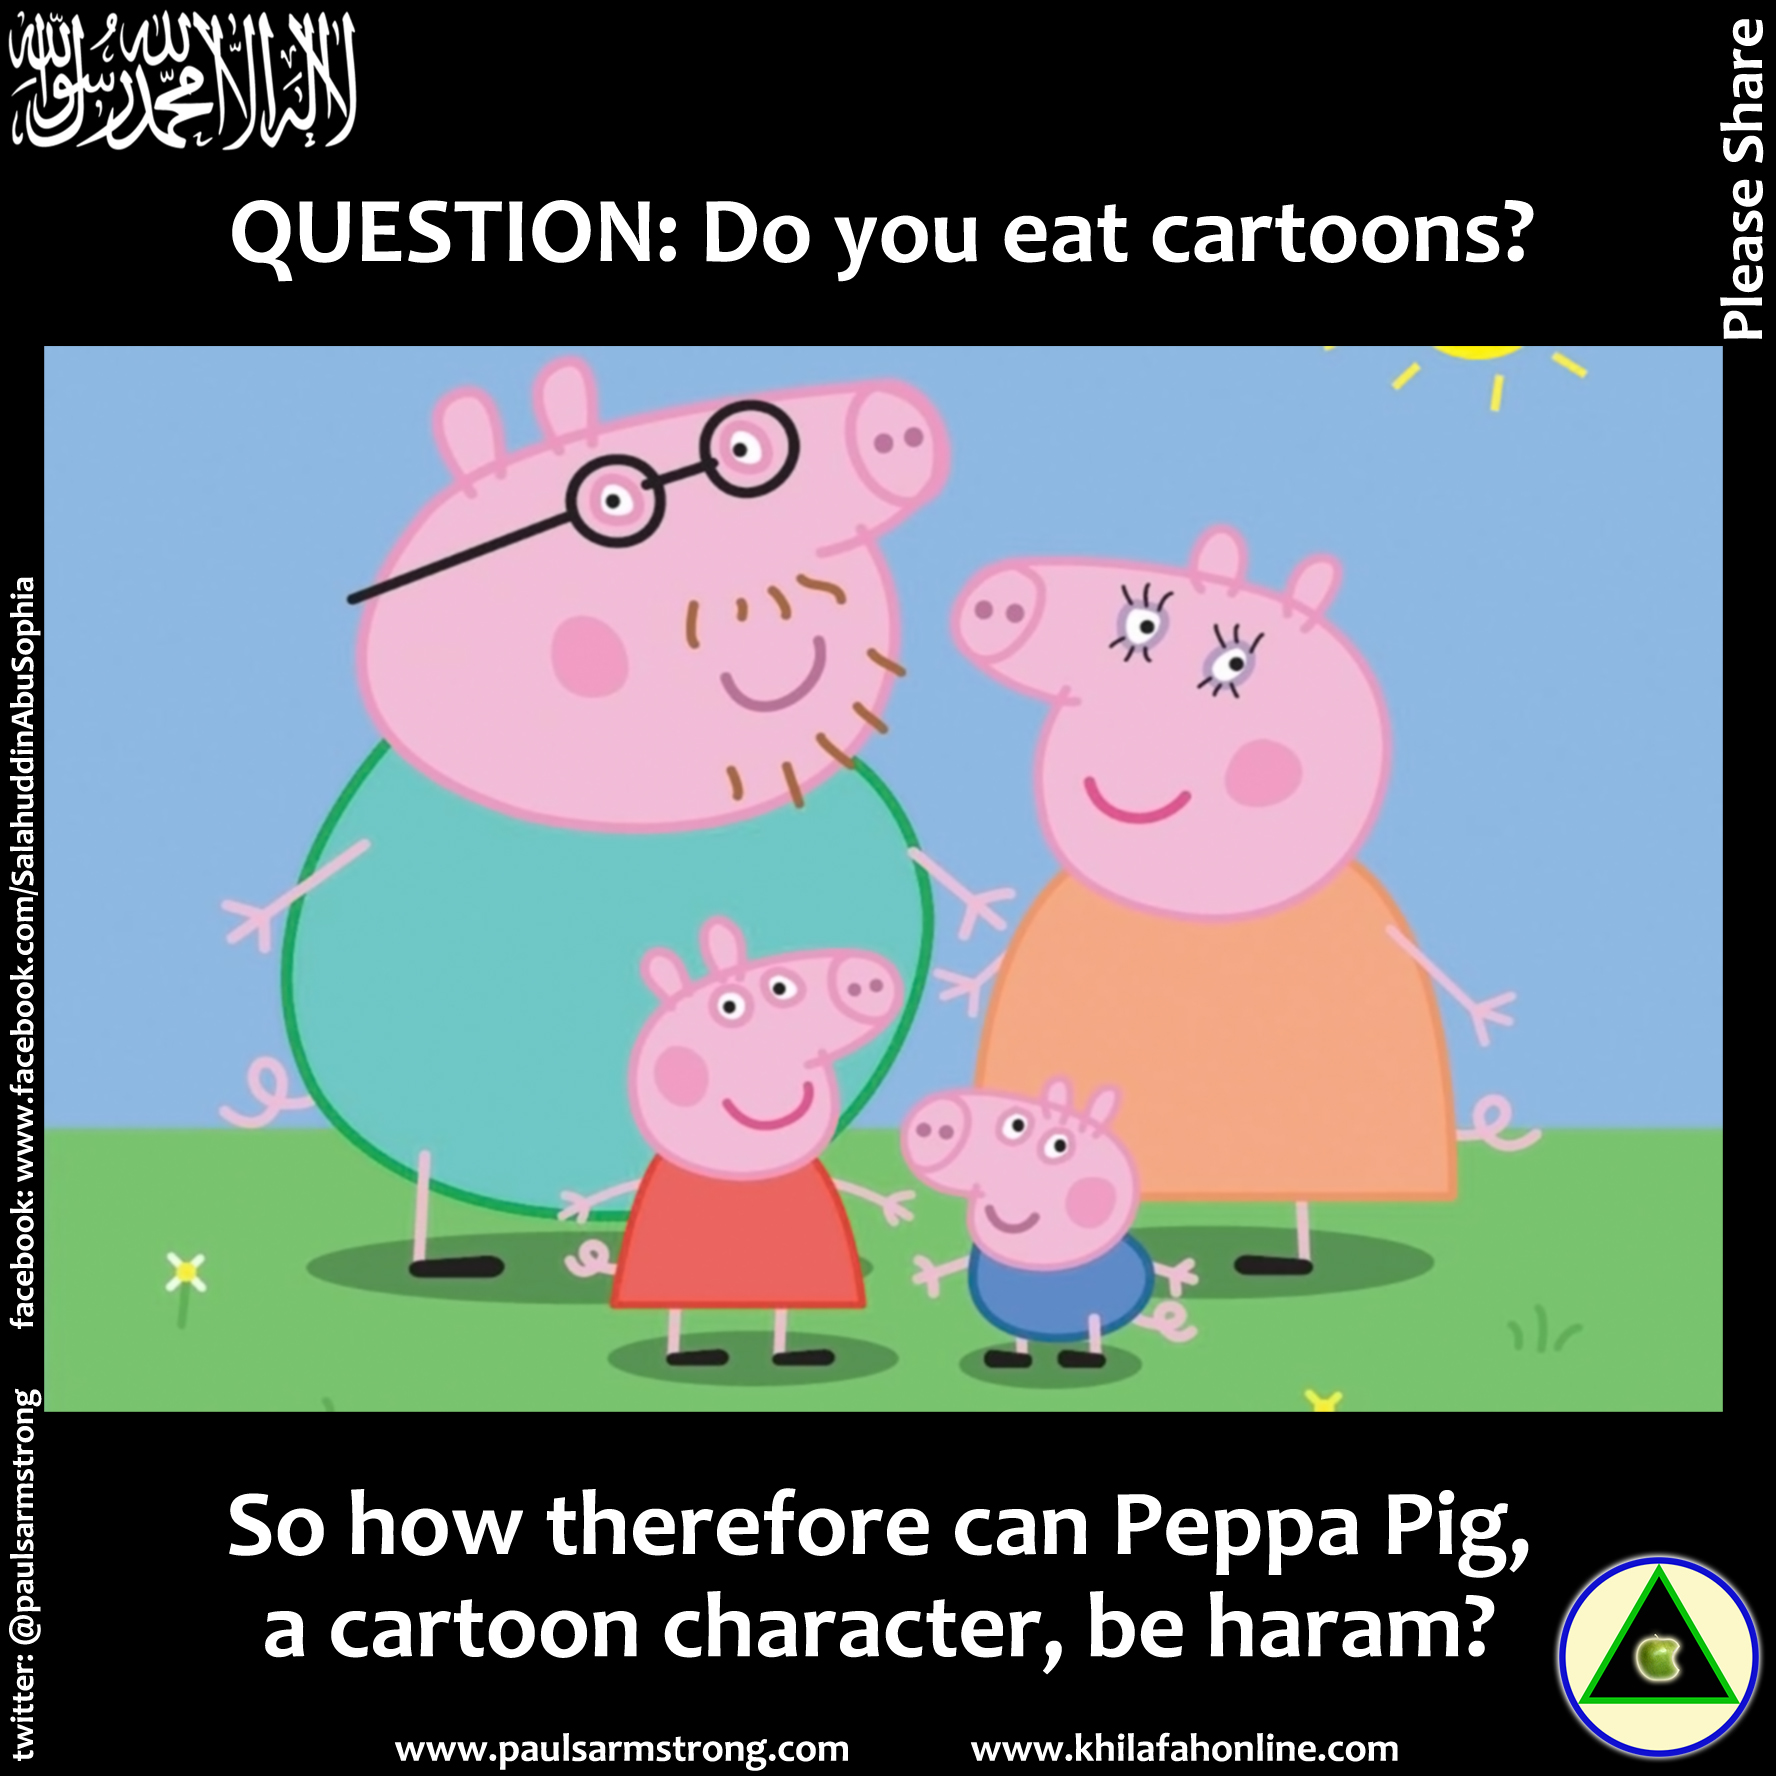 Peppa Pig haram (forbidden) in Islam? – Paul Salahuddin 